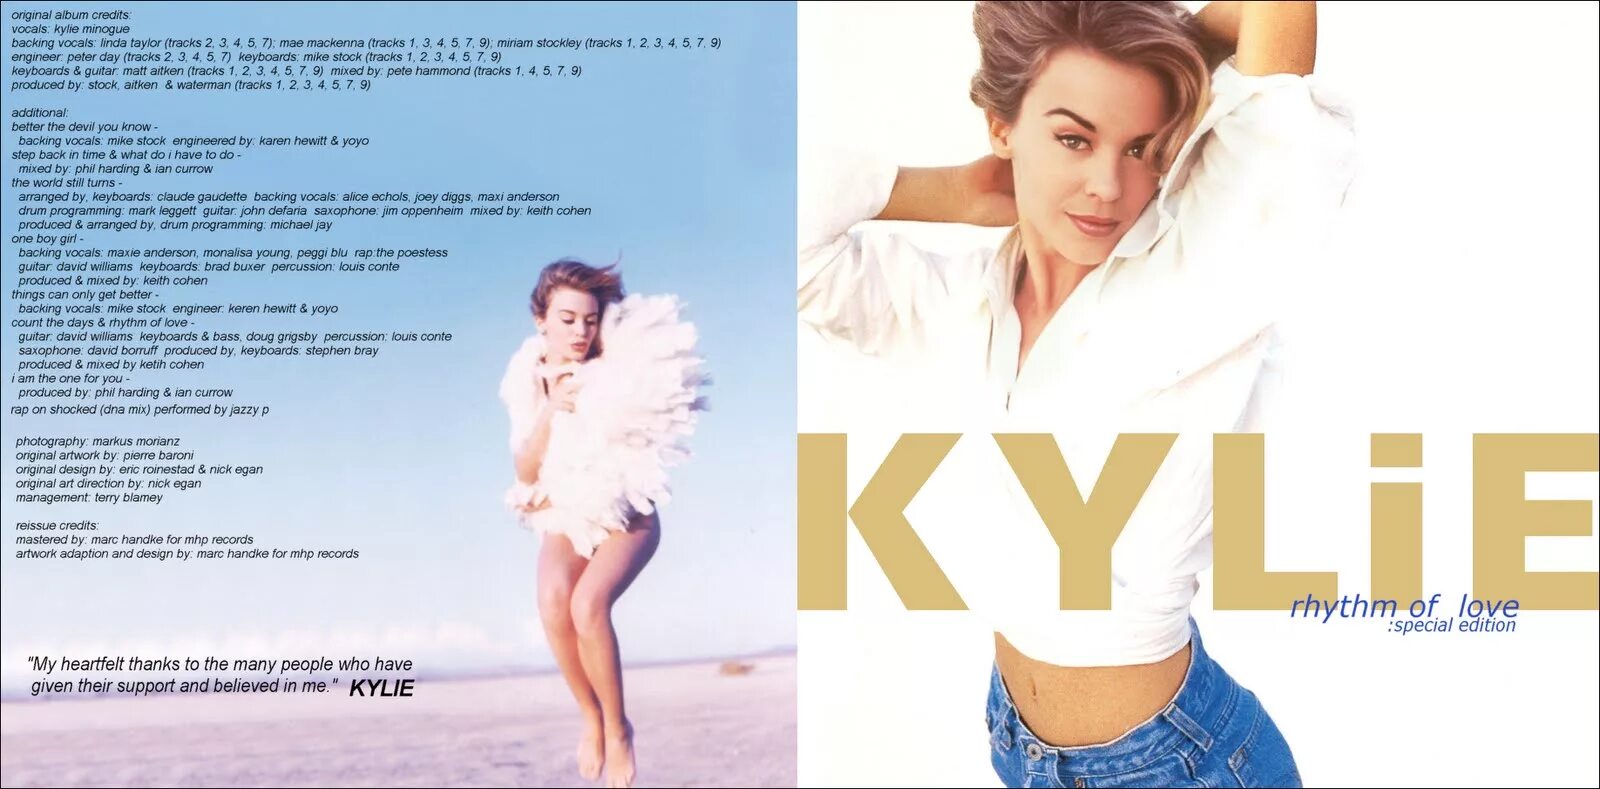 Nick minogue. Kylie Minogue Rhythm of Love. Kylie Minogue 1990. 1990: Rhythm of Love.